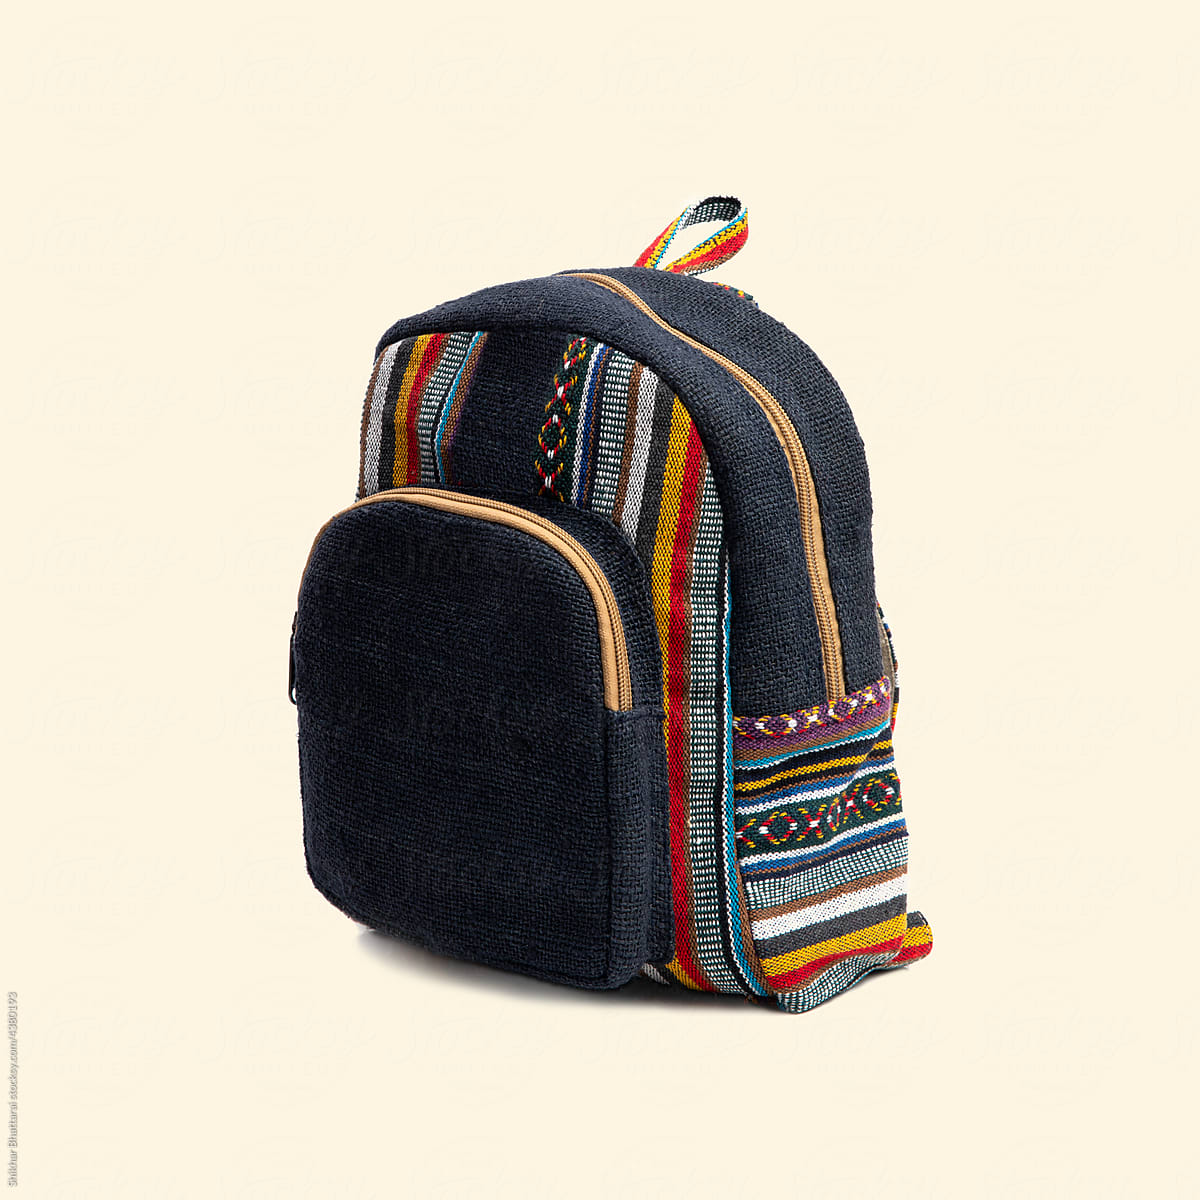 Hemp fiber backpack.